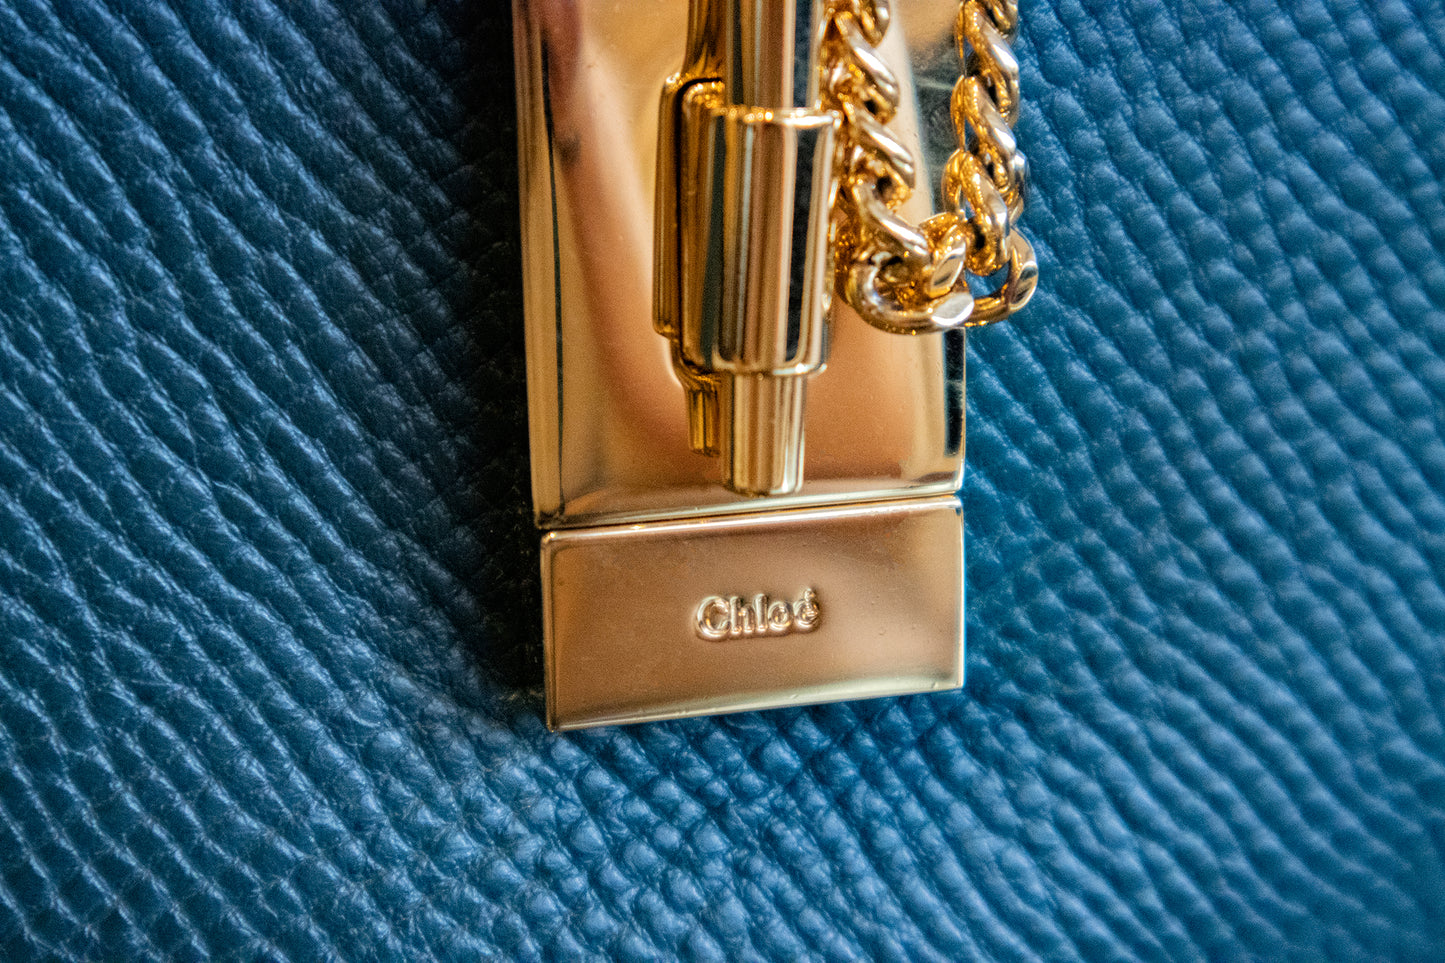 Chloé - Cross Body Tasche Rot/Grün mit goldener Hardware